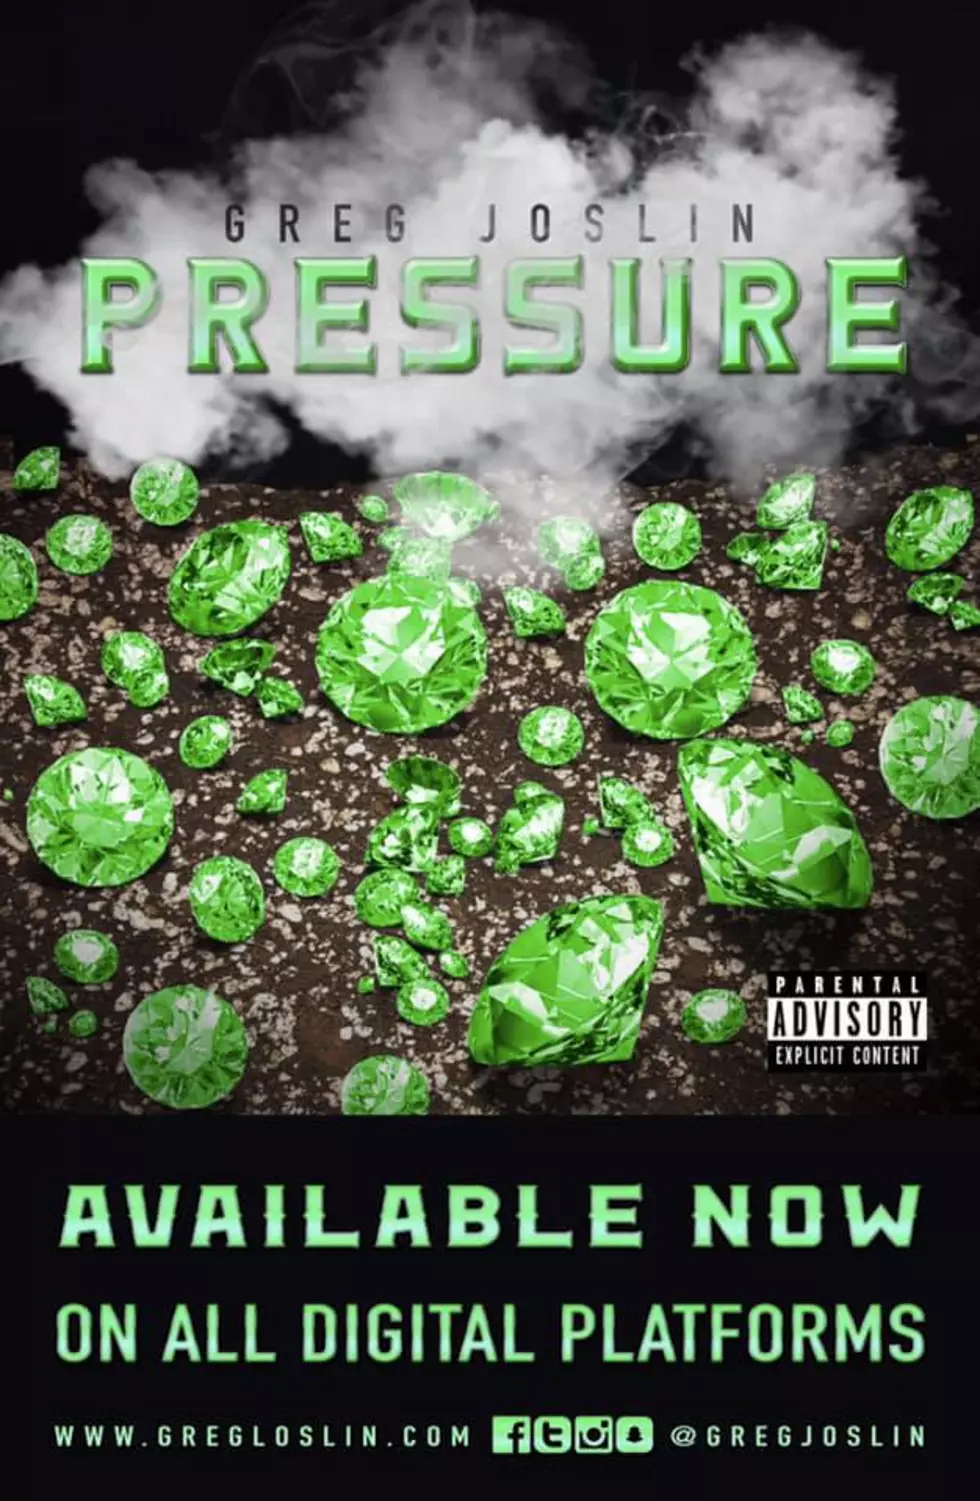 New Music From Local Flint Rapper Greg Joslin “Pressure” [Audio]